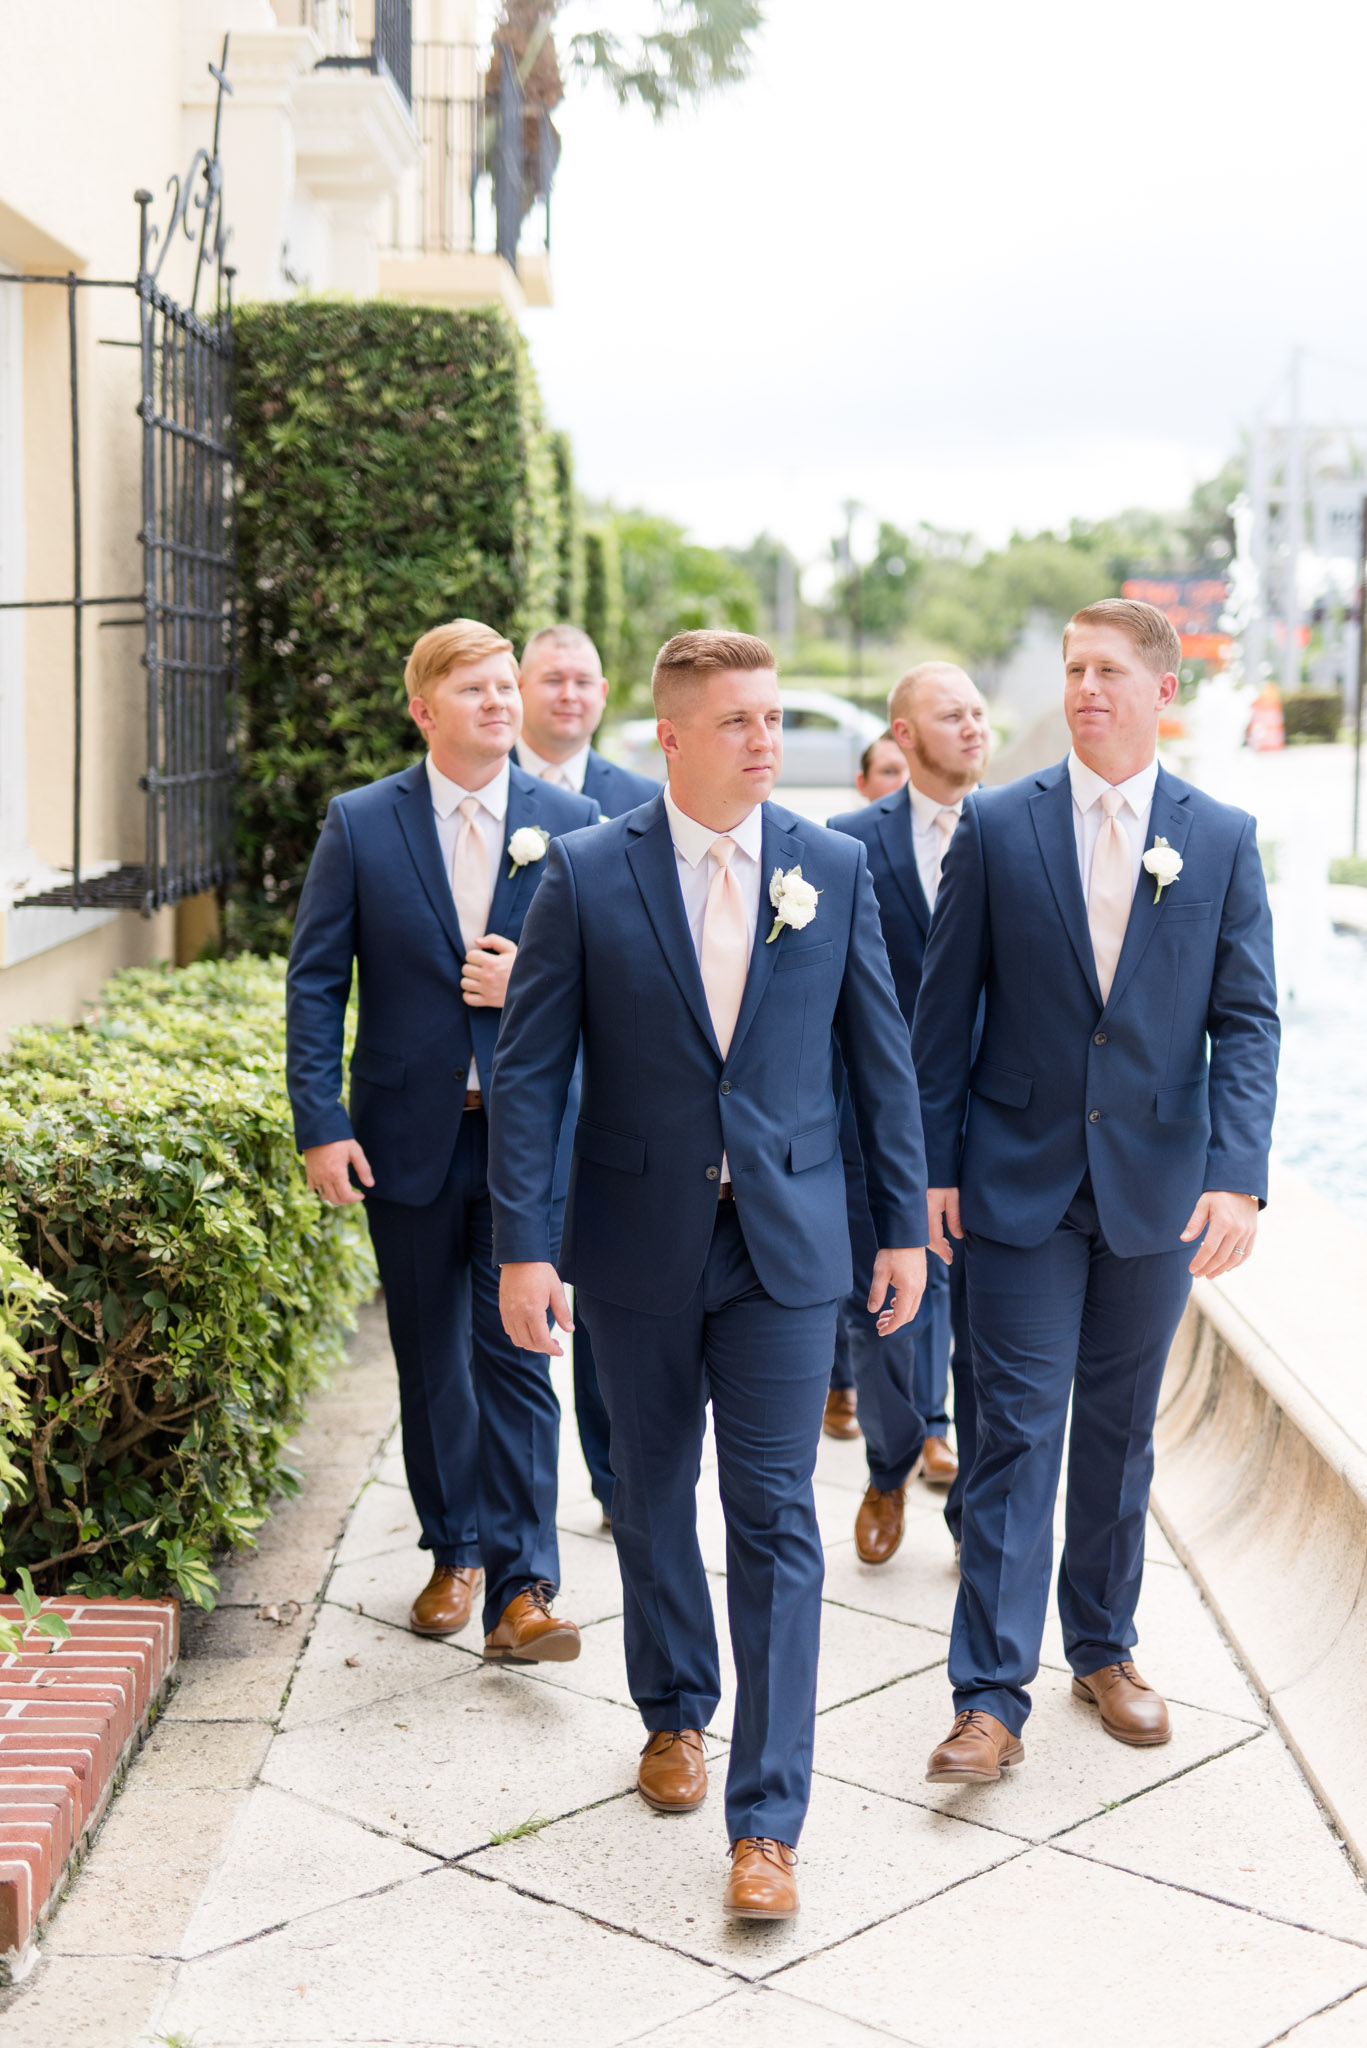 Groom walks with groomsmen.